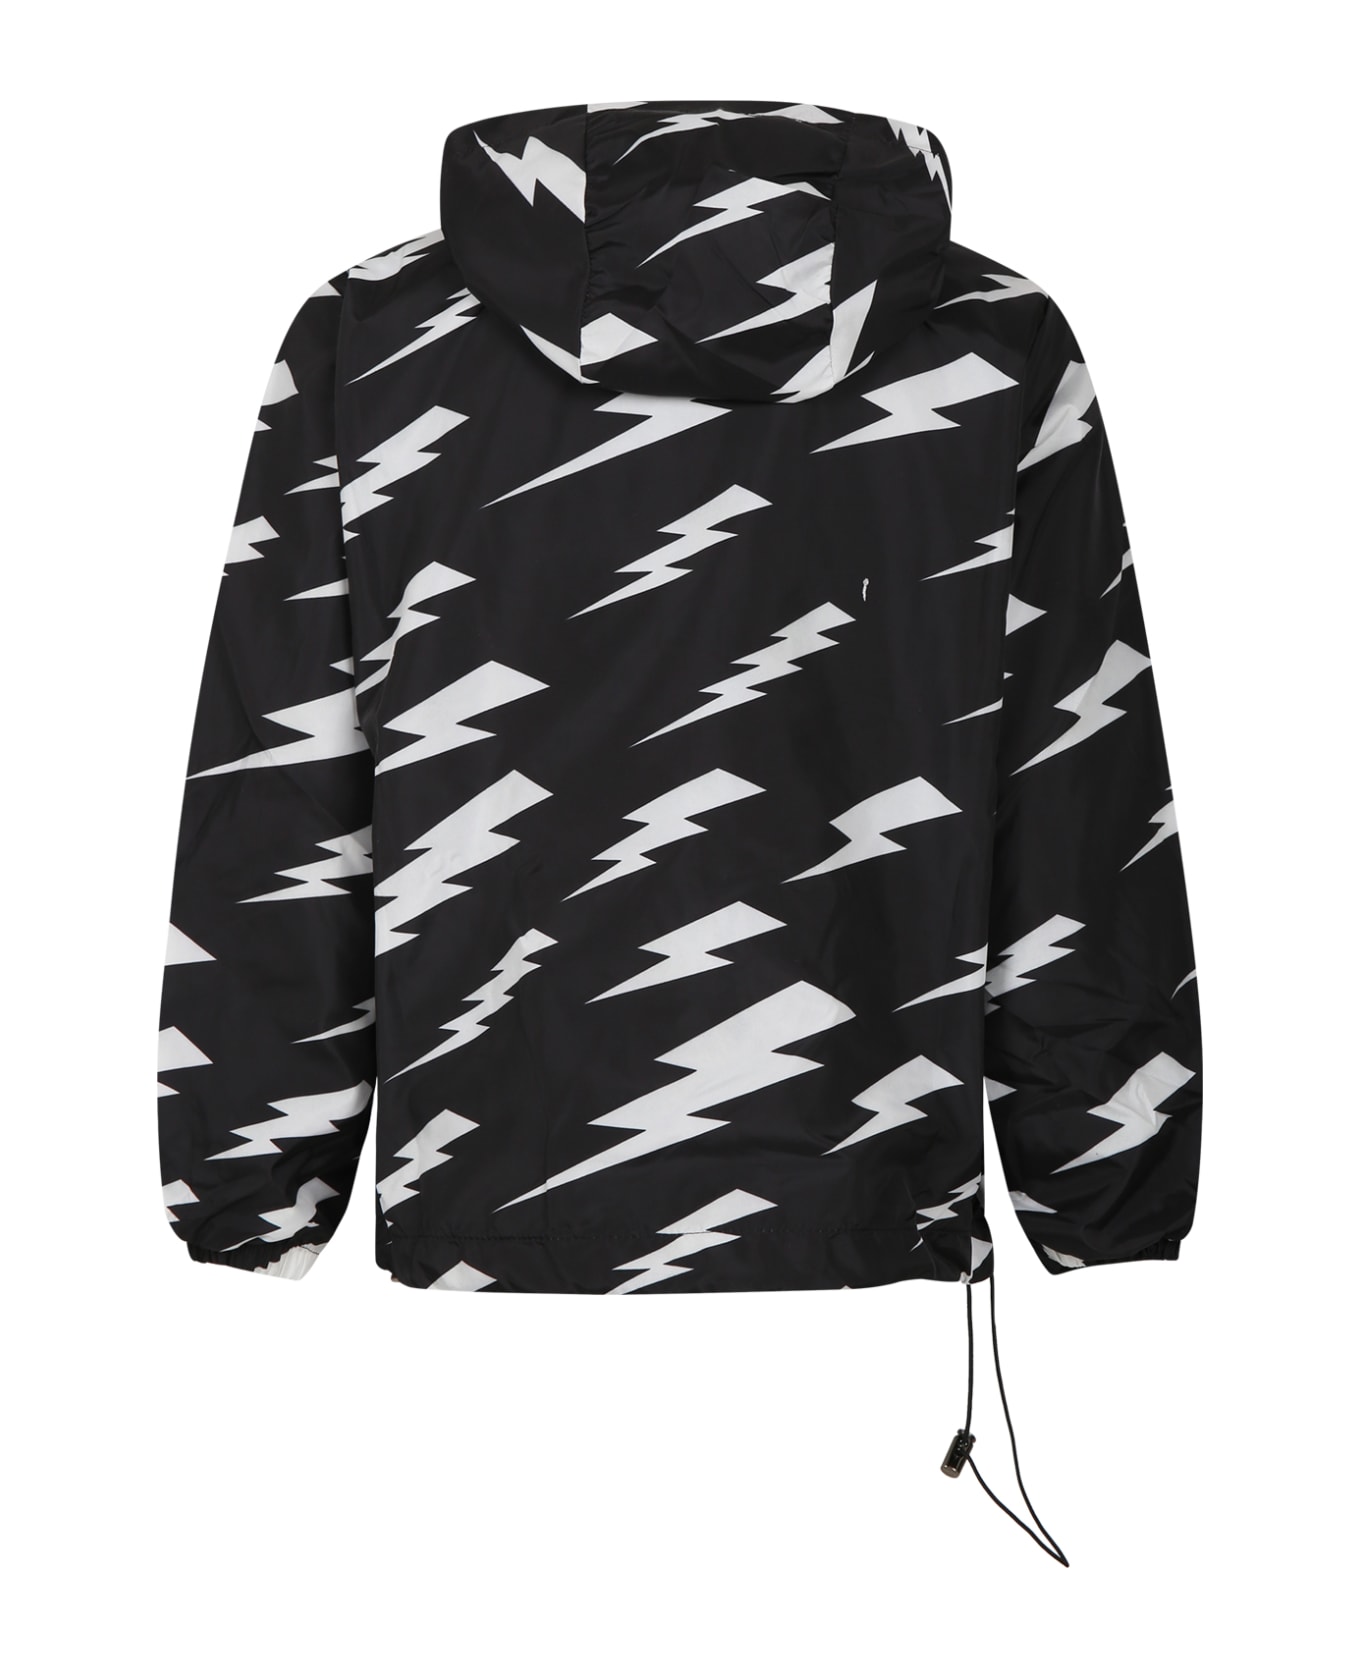 Neil Barrett Black Windbreaker For Boy With Iconic Lightning Bolts And Logo - Black